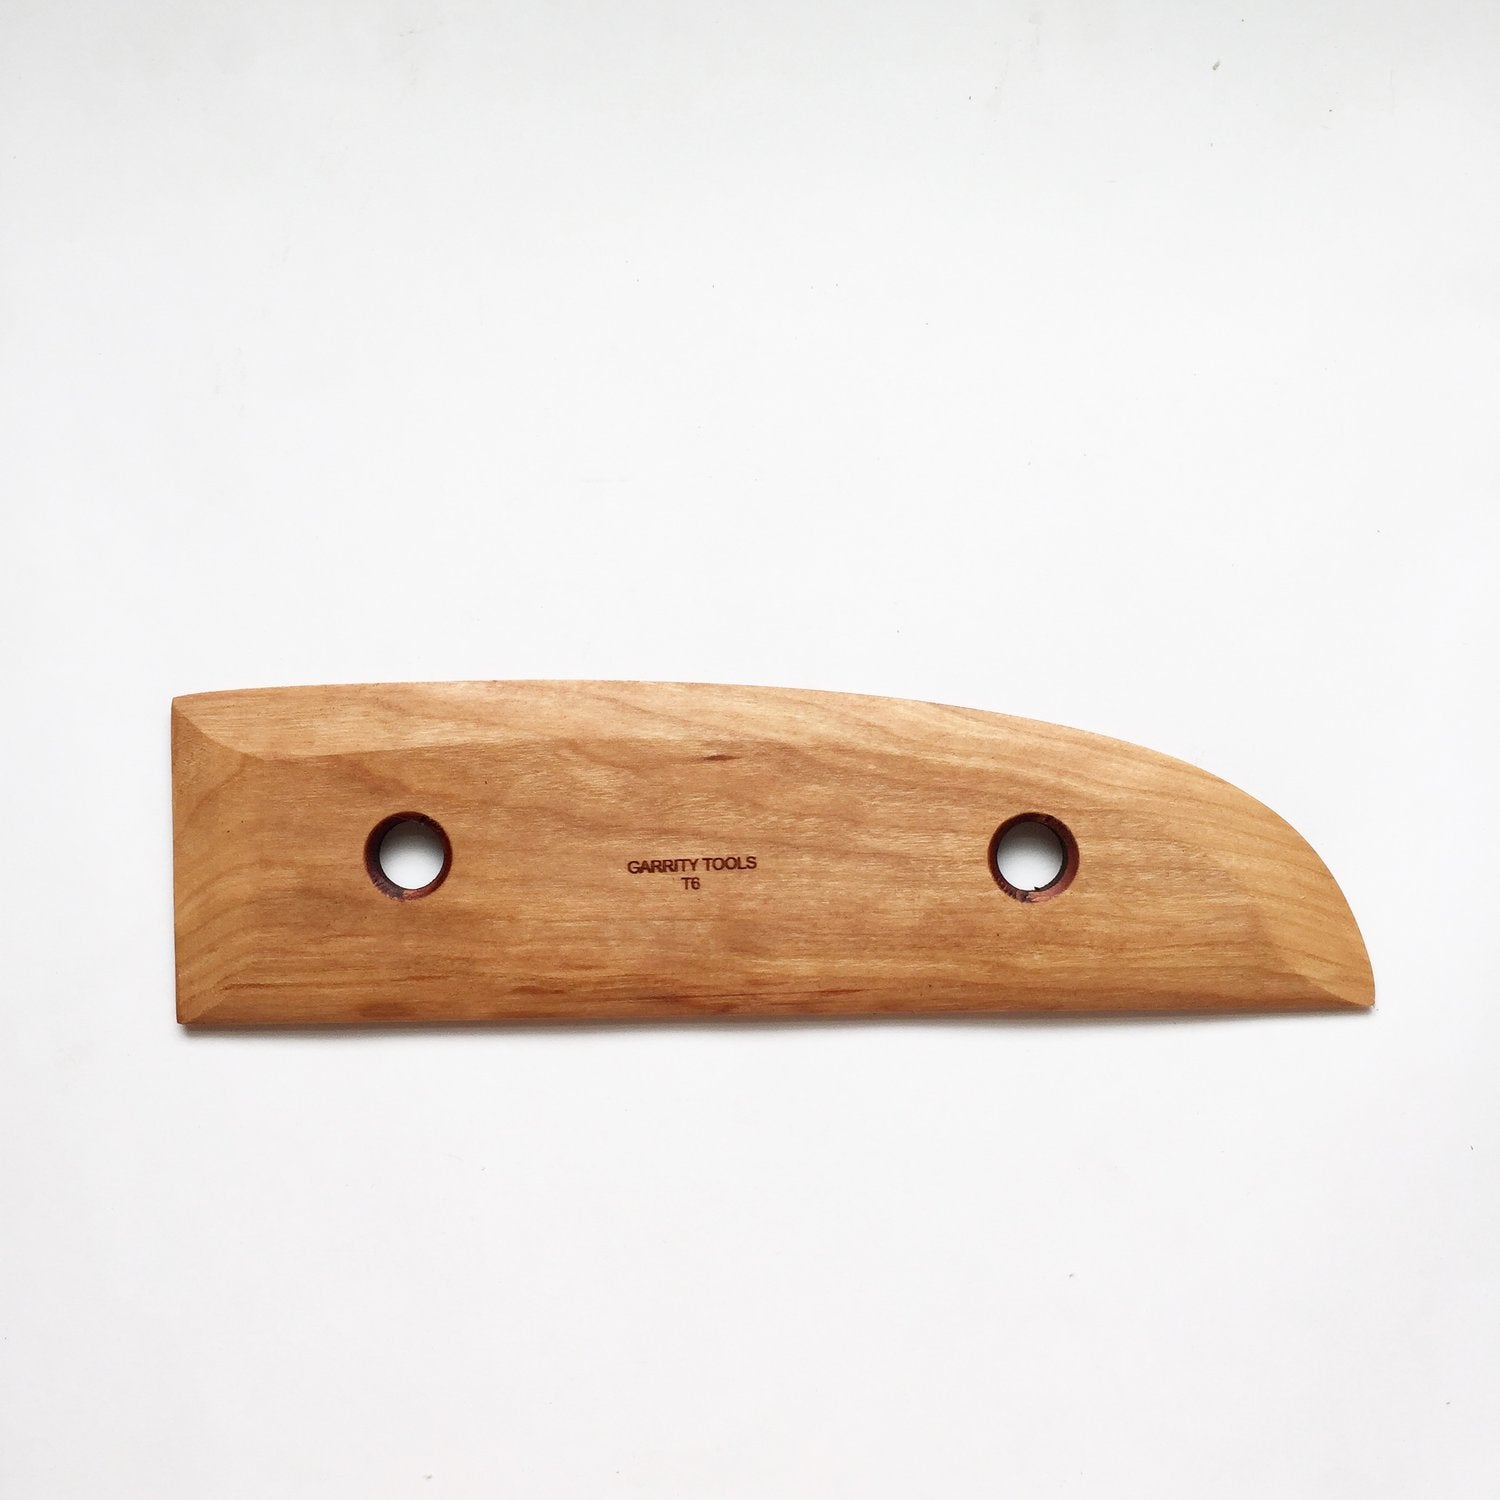 Garrity Tools T6 Wooden Rib image 1